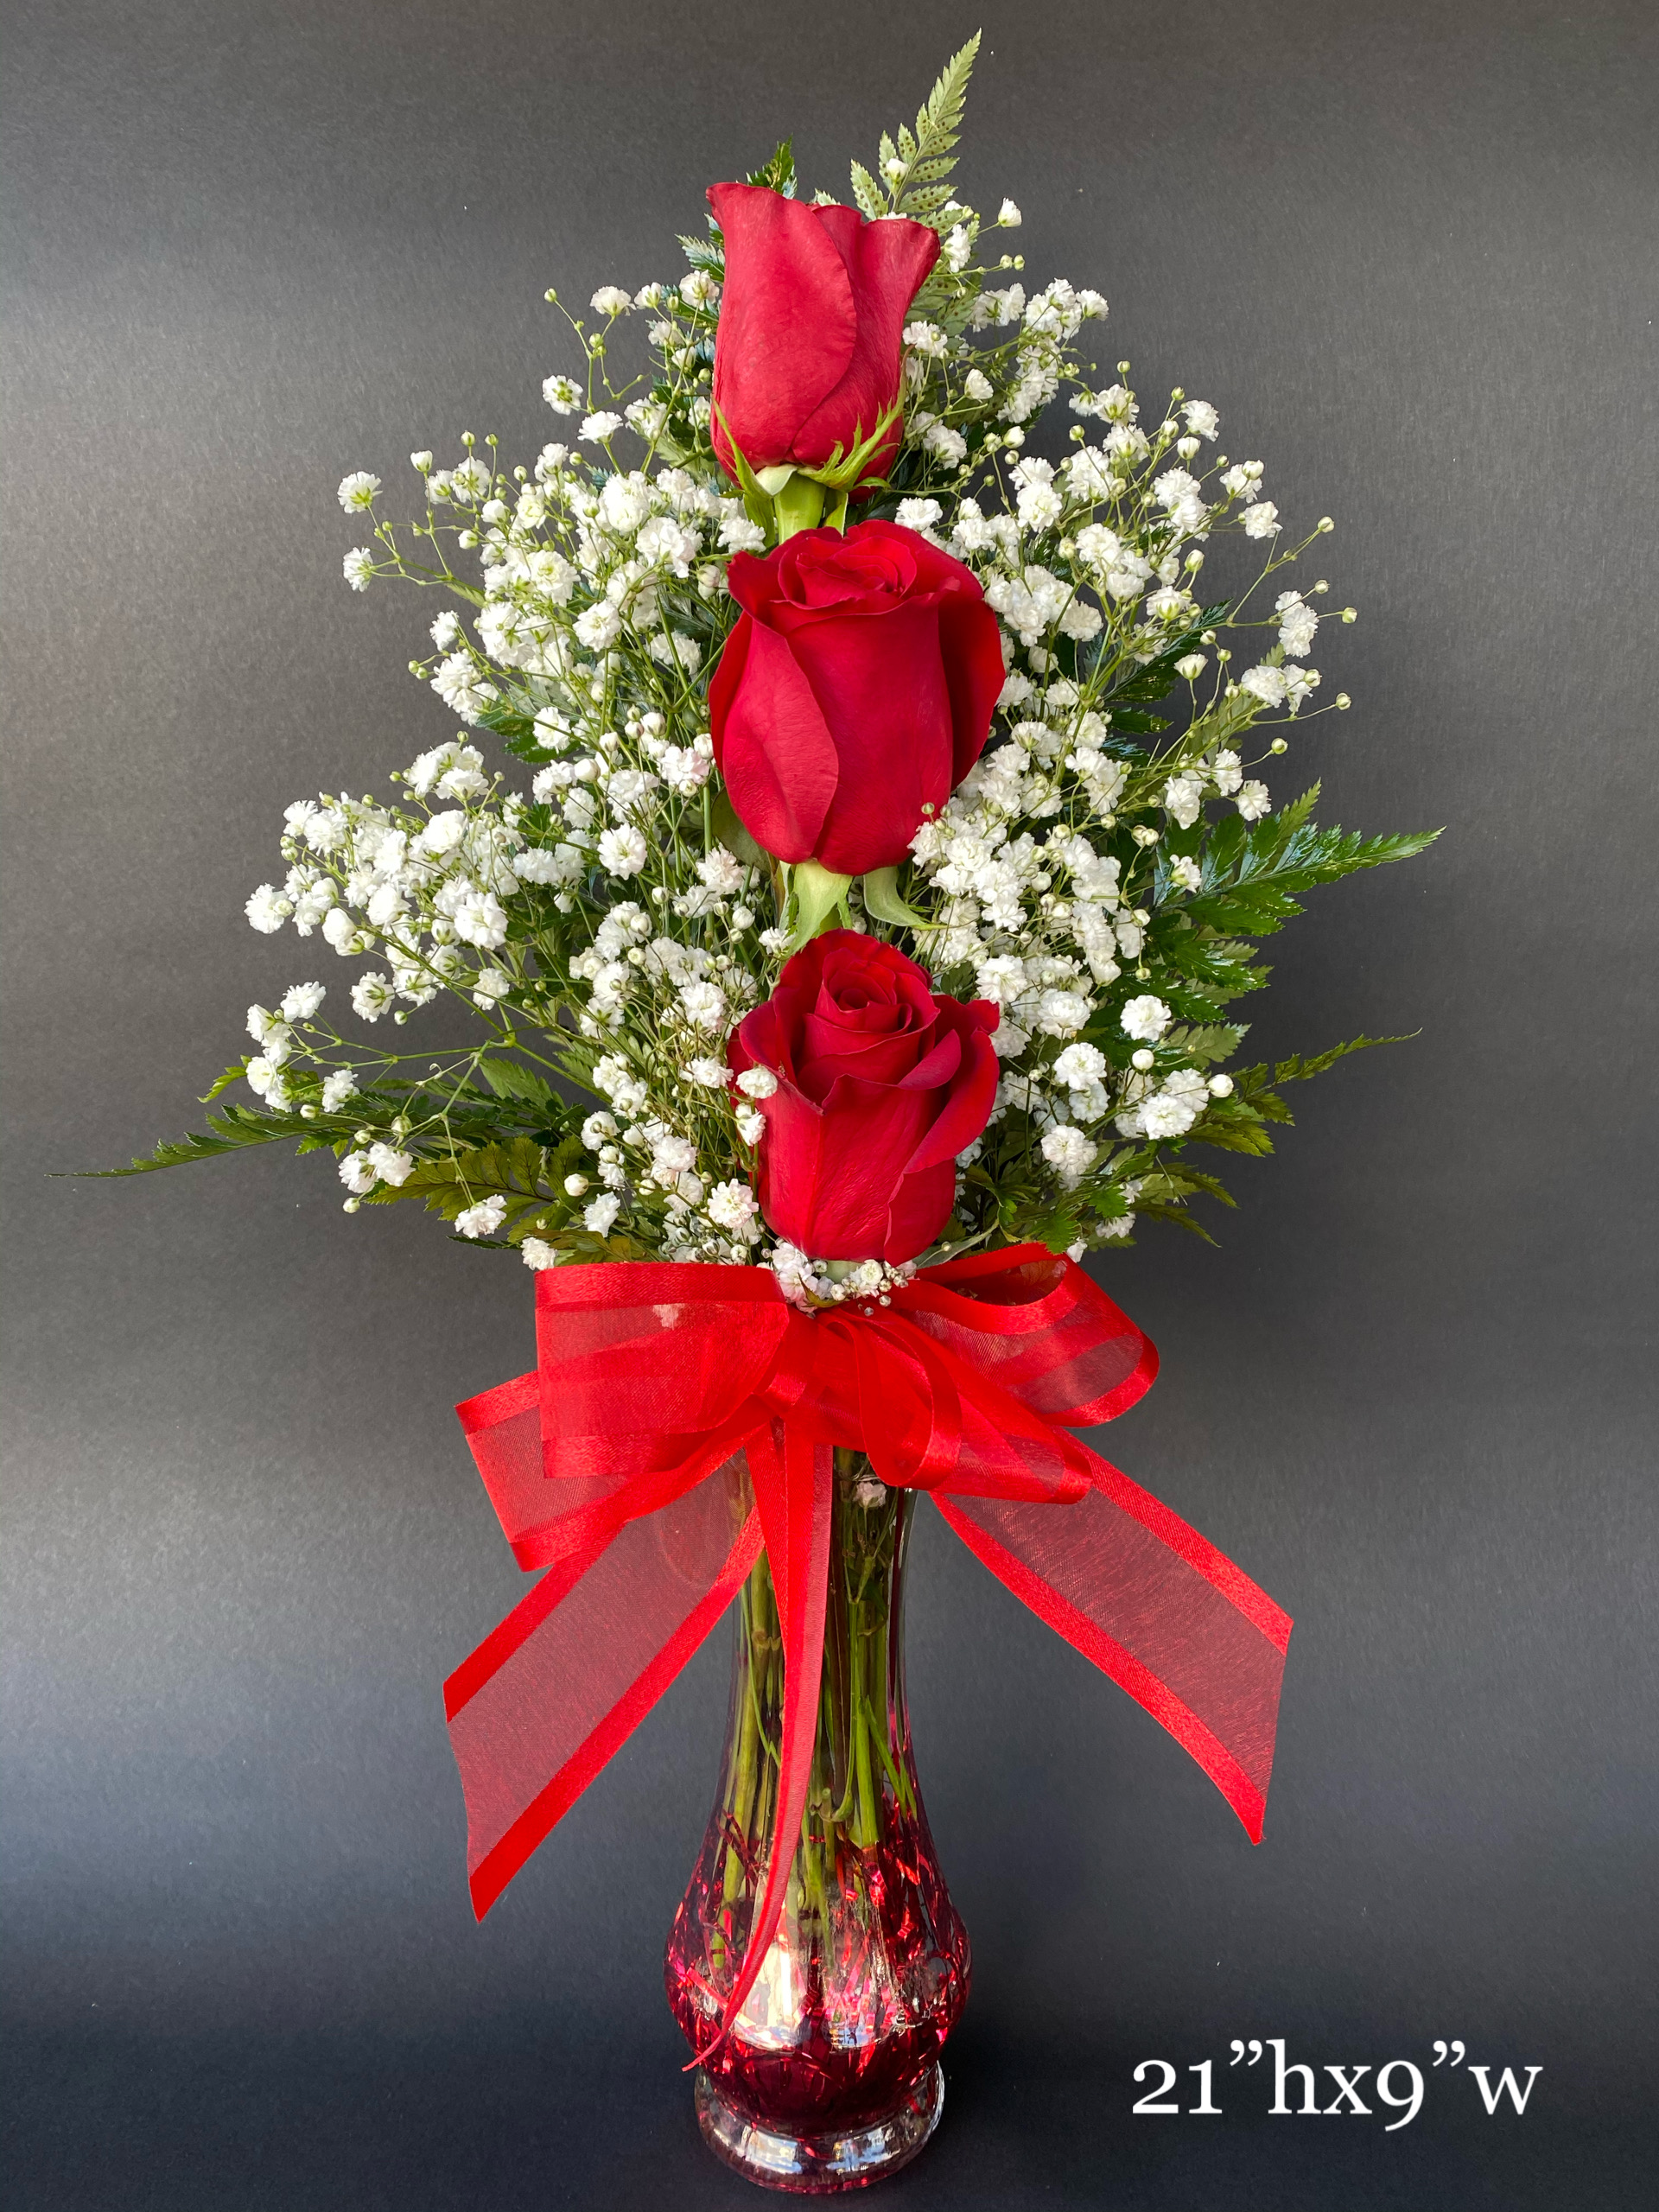 I Love You Roses 
$29.99 + Tax